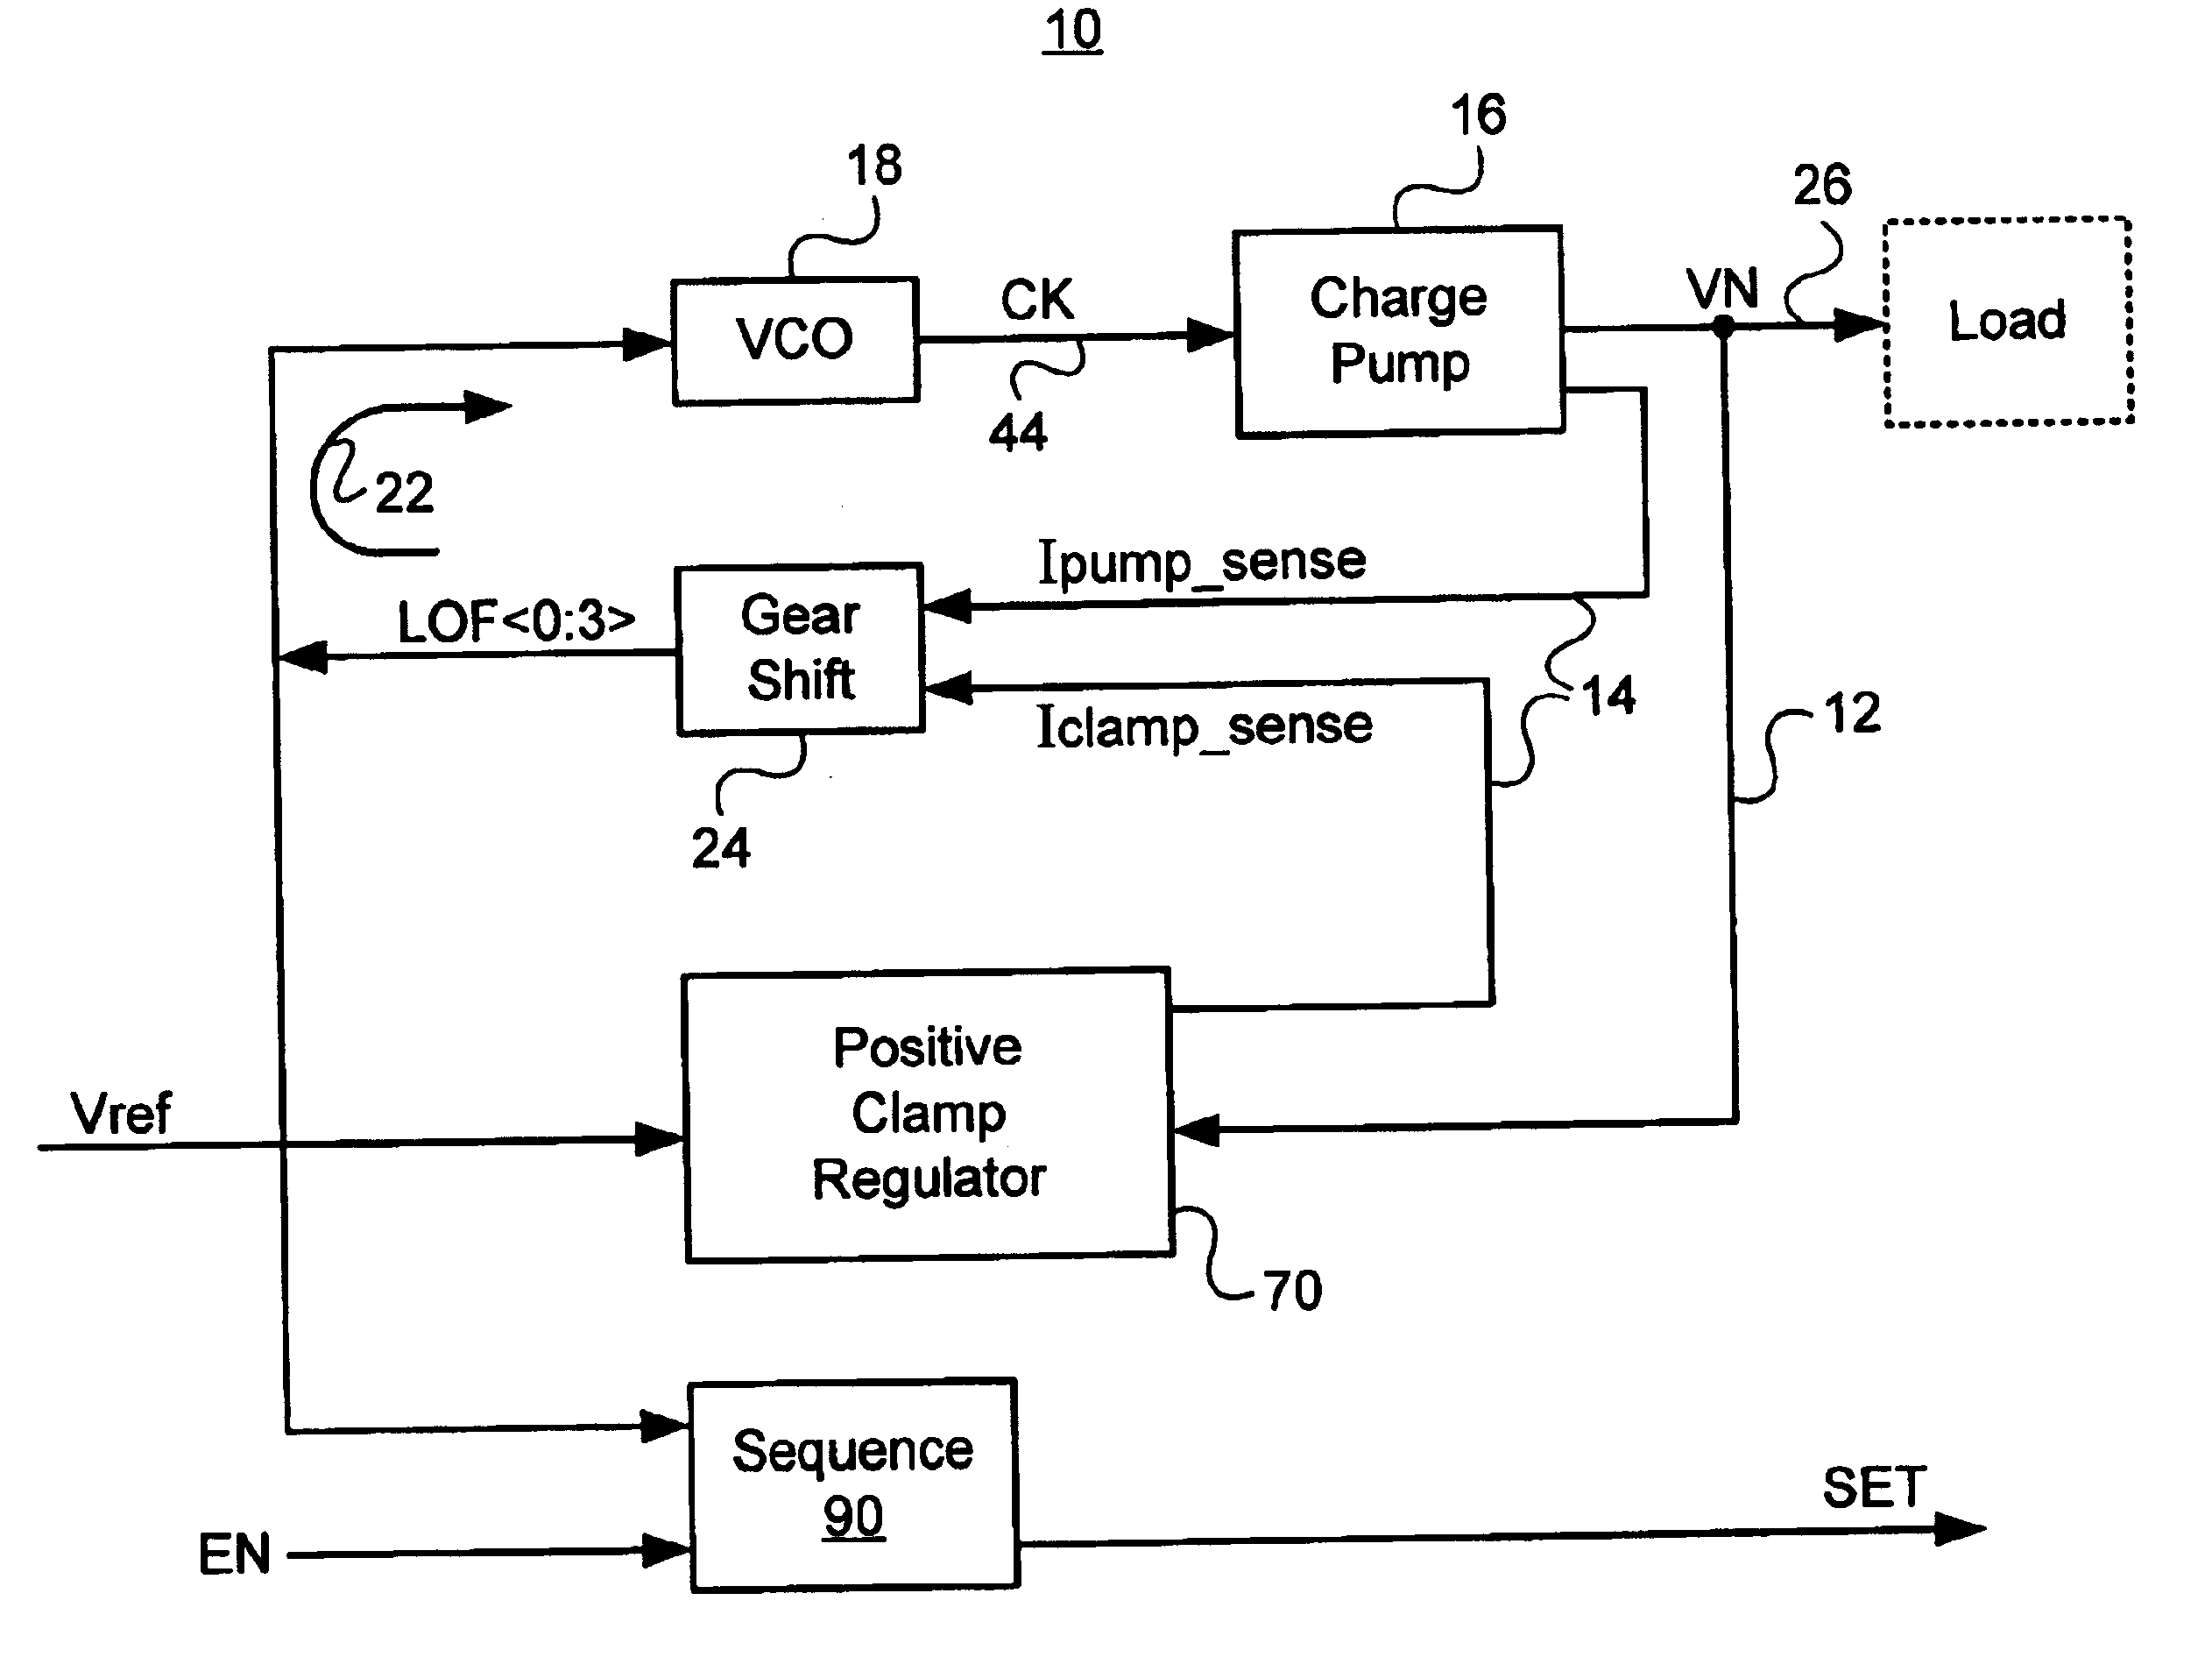 Charge pump based voltage regulator with smart power regulation